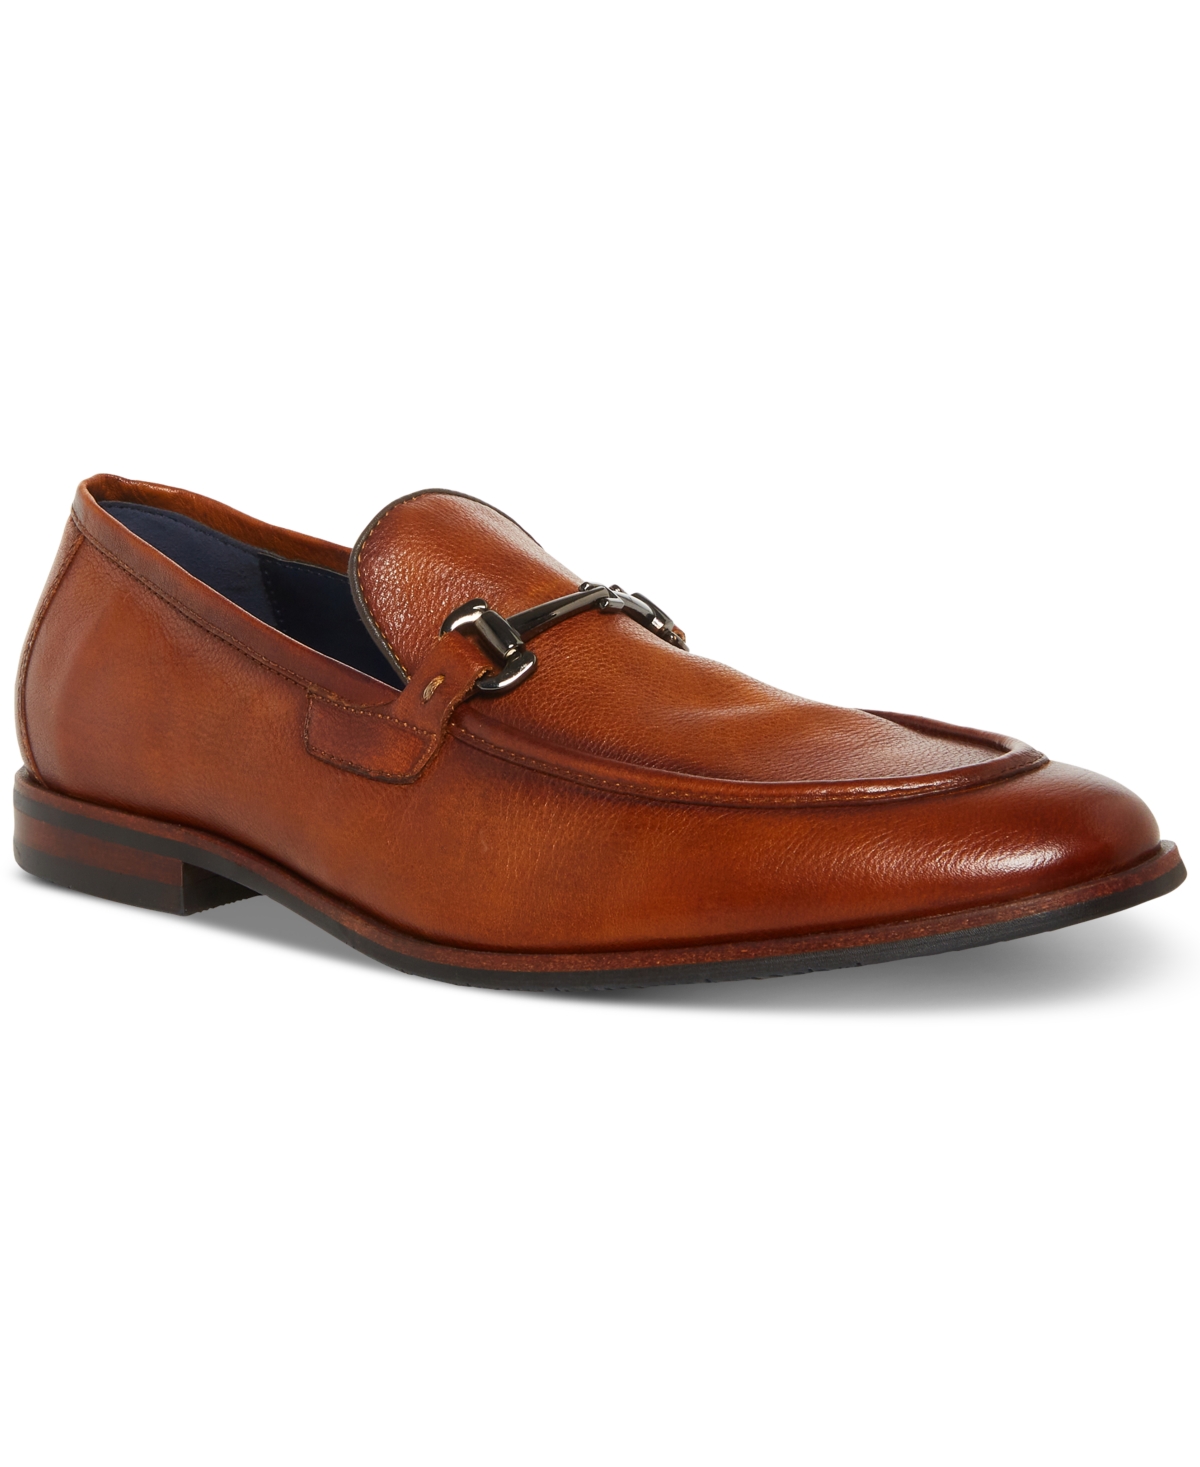 Men's Caspin Bit Dress Loafer - Tan Leather